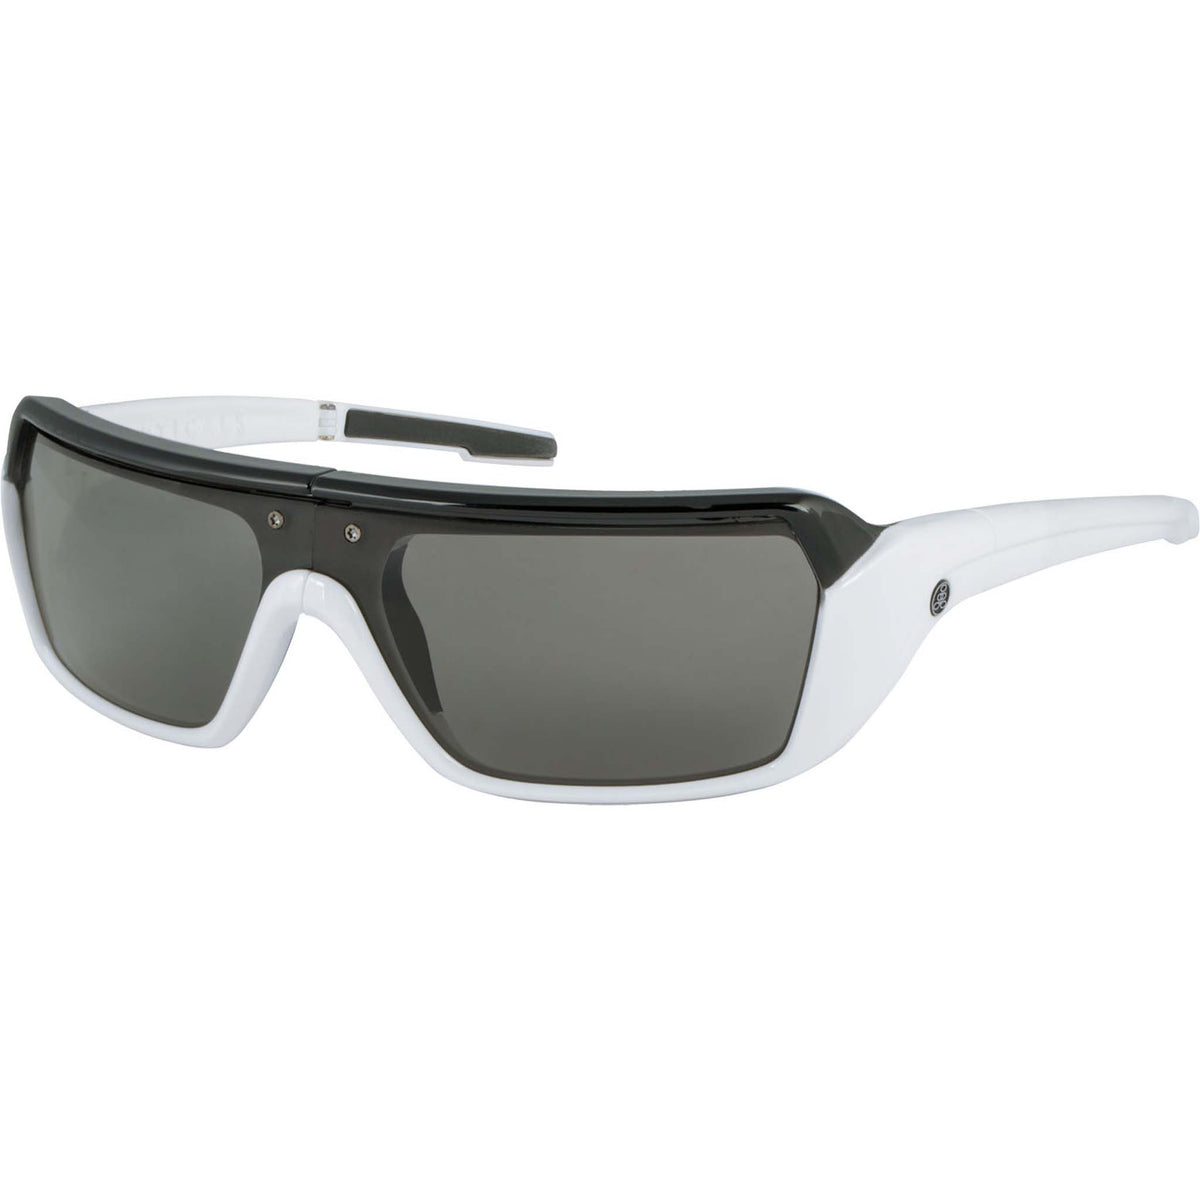 Popticals, Premium Compact Sunglasses, PopStorm, 010060-RBGP, Polarized Sunglasses, Gloss Black/Red Frame, Gray Lenses, Glam View